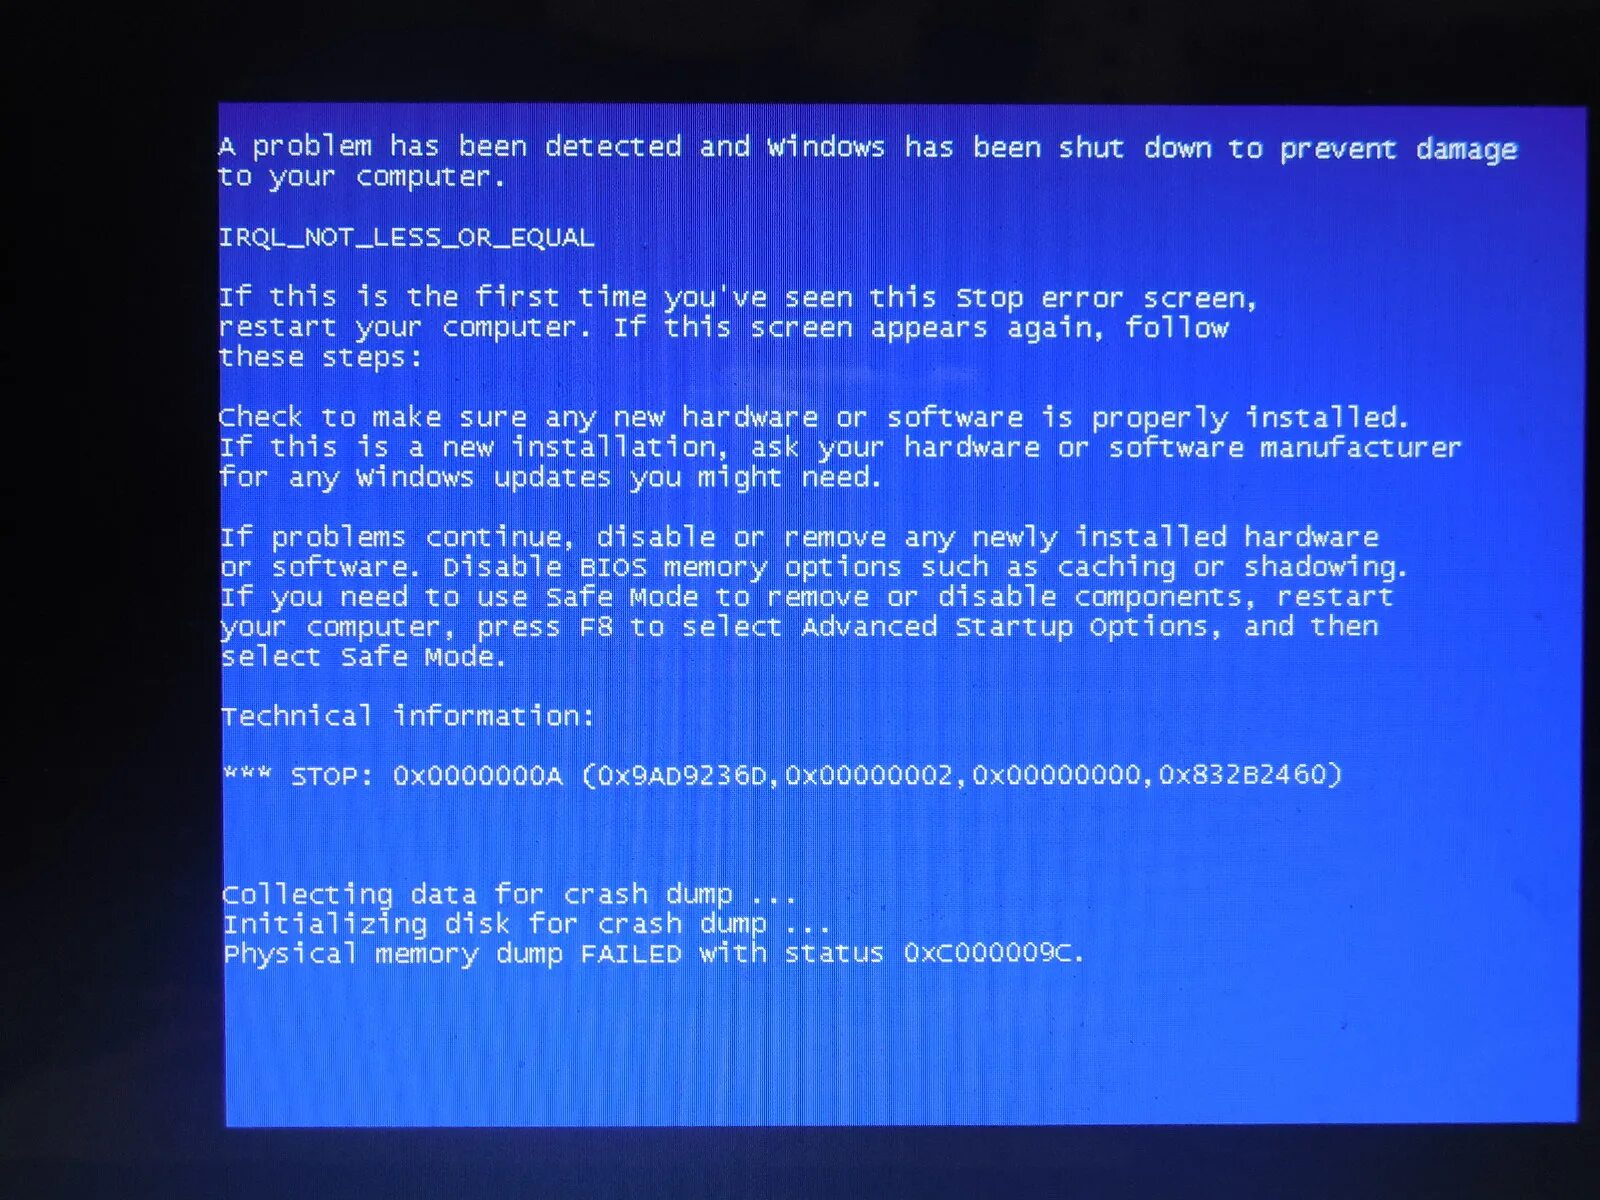 Has been shut down to prevent. Краш виндовс. Reboot ПК. A problem has been detected and Windows has been shut down to prevent Damage to your Computer. При запуске компьютера открывается синяя окошка.